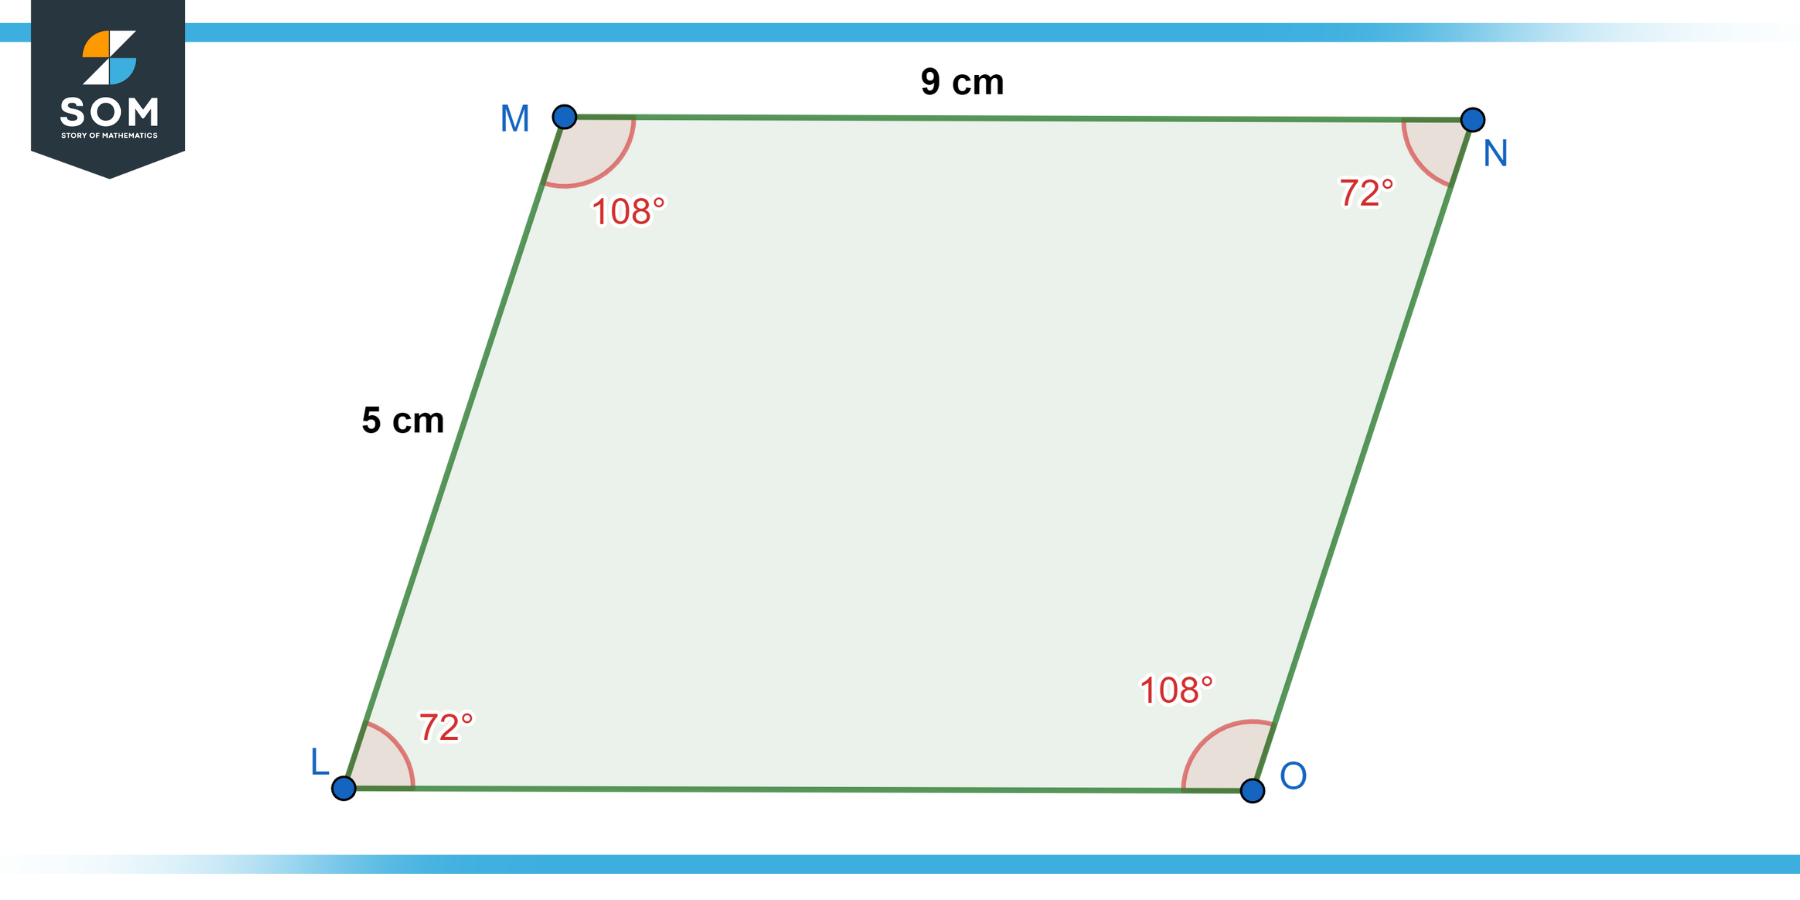 Parallelogram LMNO 7cm 9cm